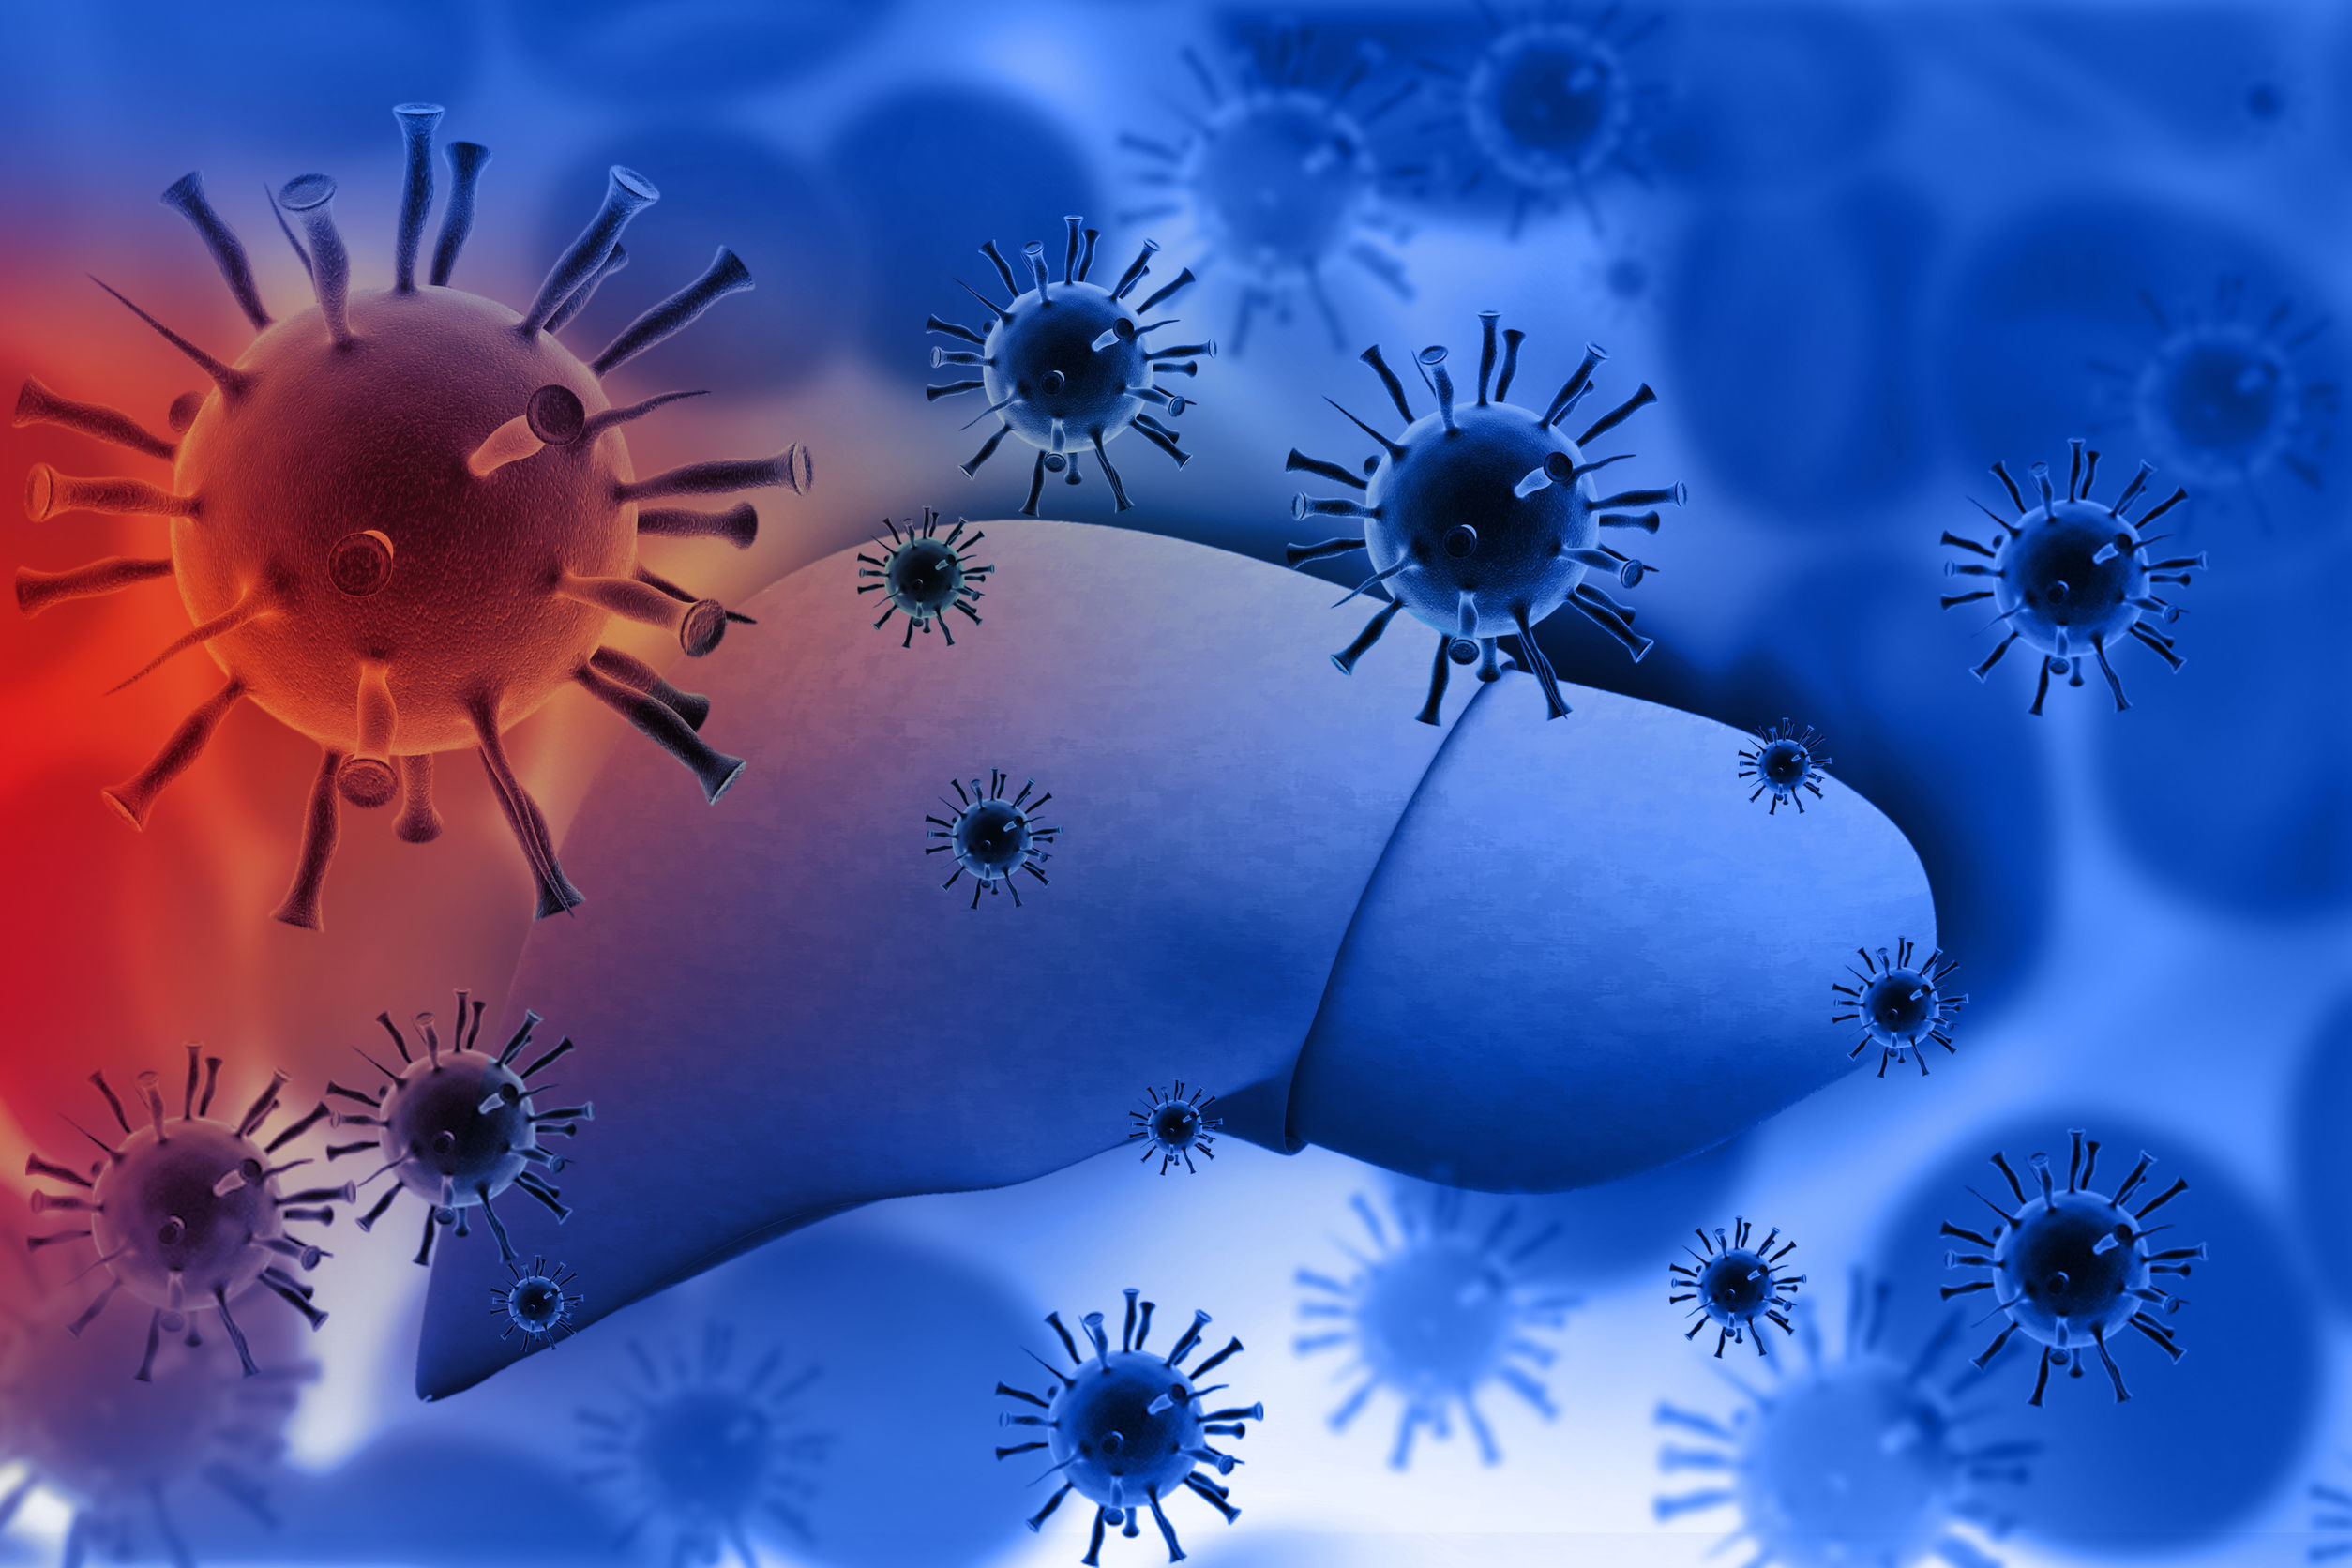 NH Hepatitis An Outbreak Accelerating